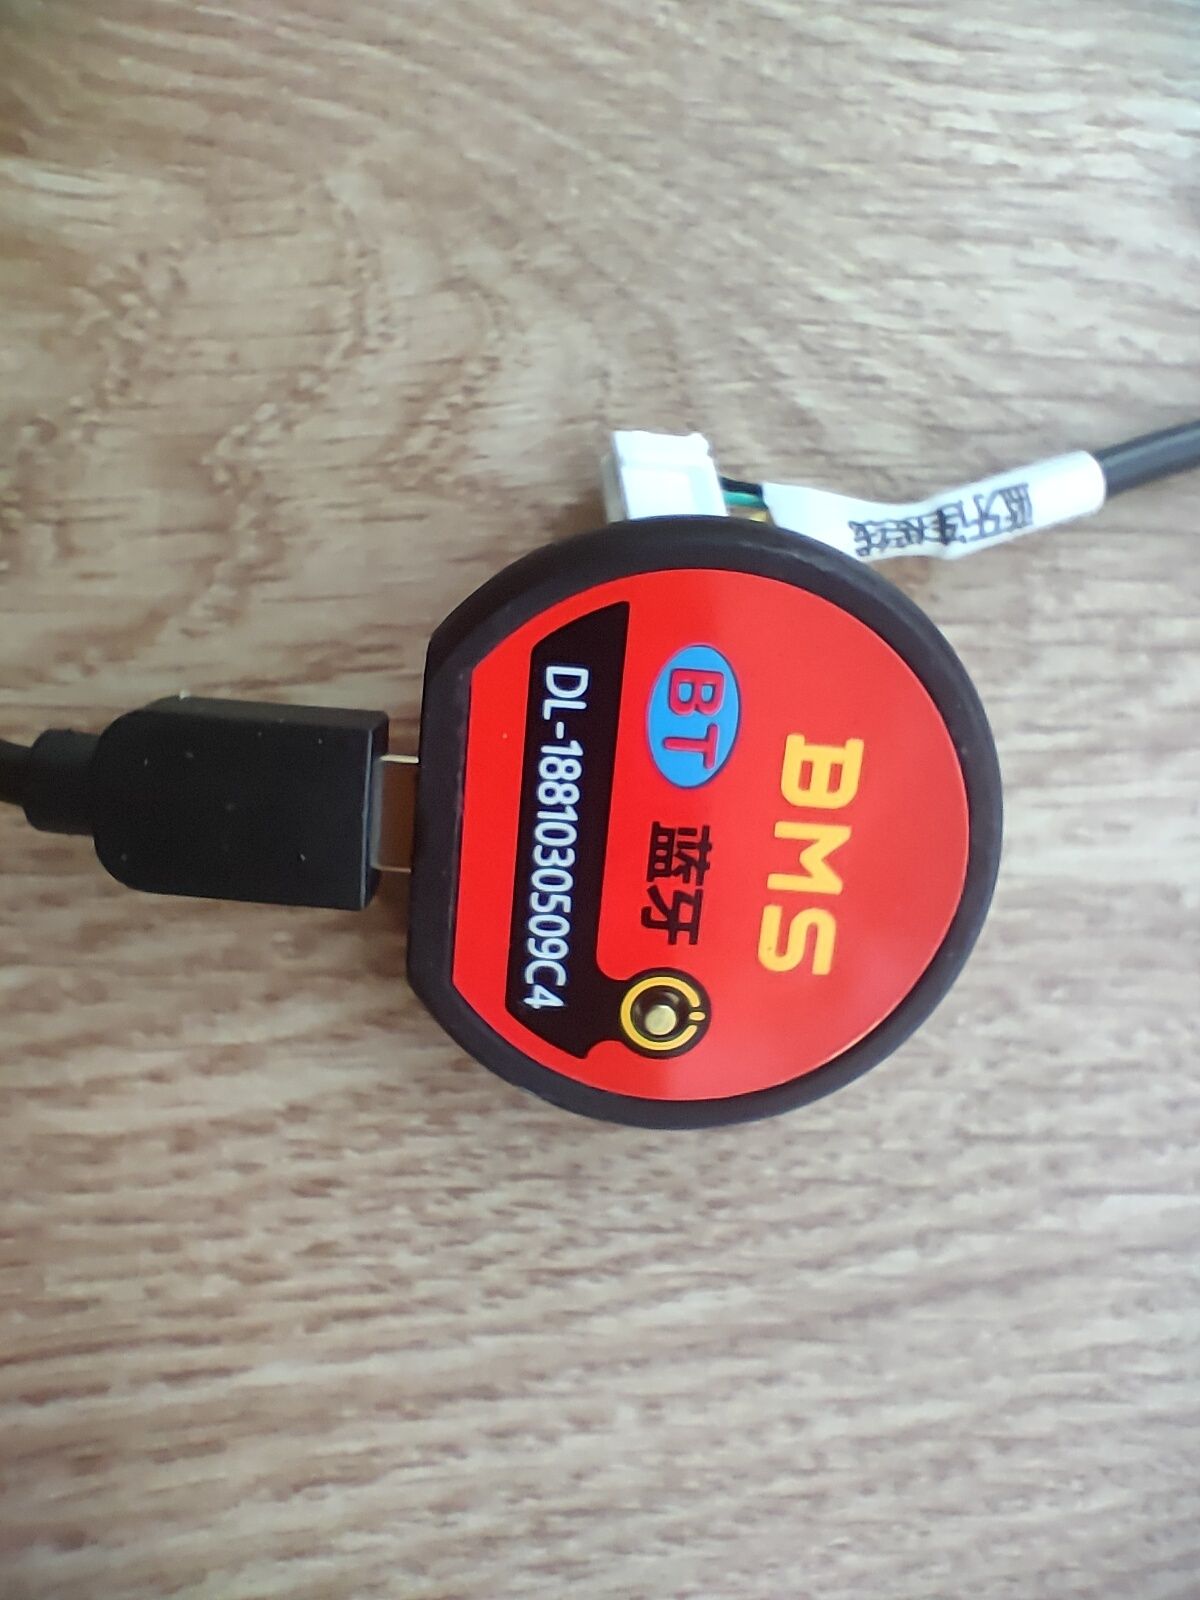 BMS smart 10s36v Hibms плата с Bluetooth модулем